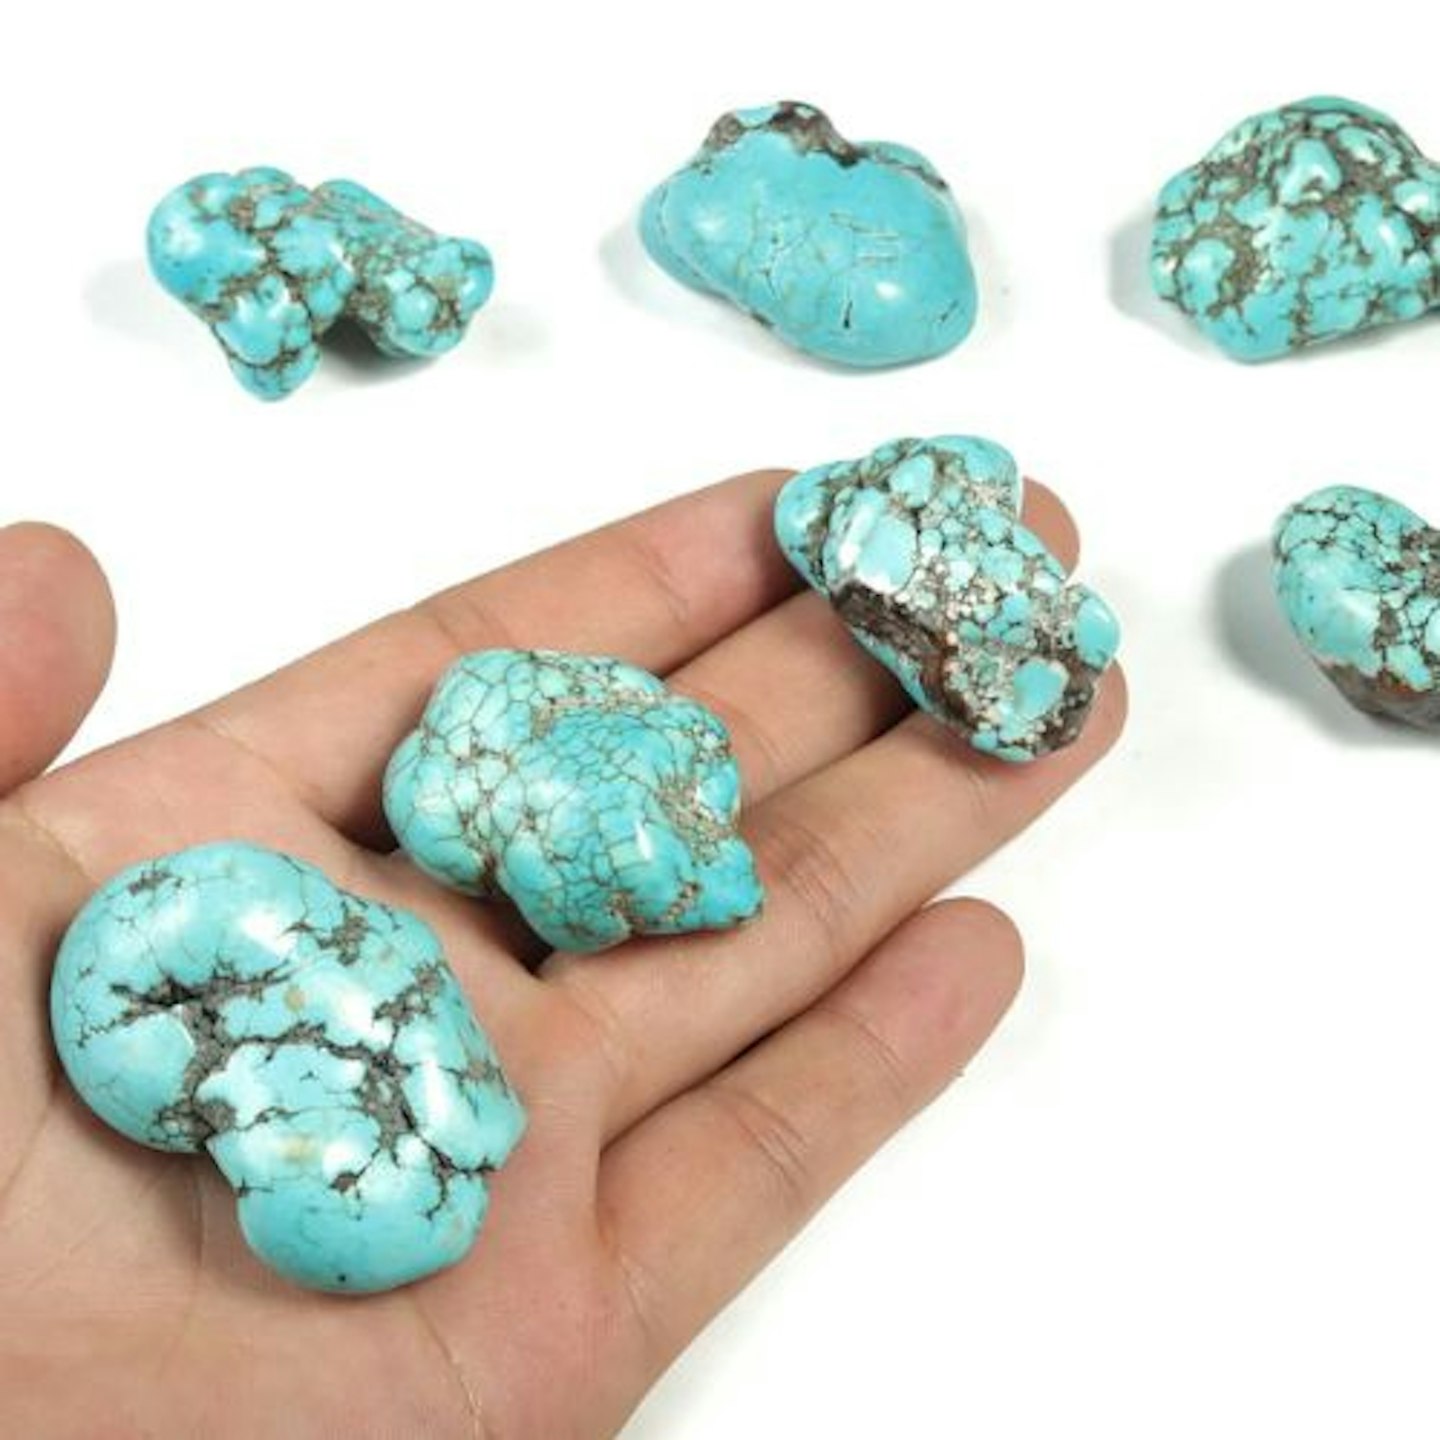 Turquoise Tumbled Stone A++ - Turquoise Crystal – Turquoise Crystal Stone – Turquoise Gemstones – Healing Stones - 1 - 1.5 inch - TU1030